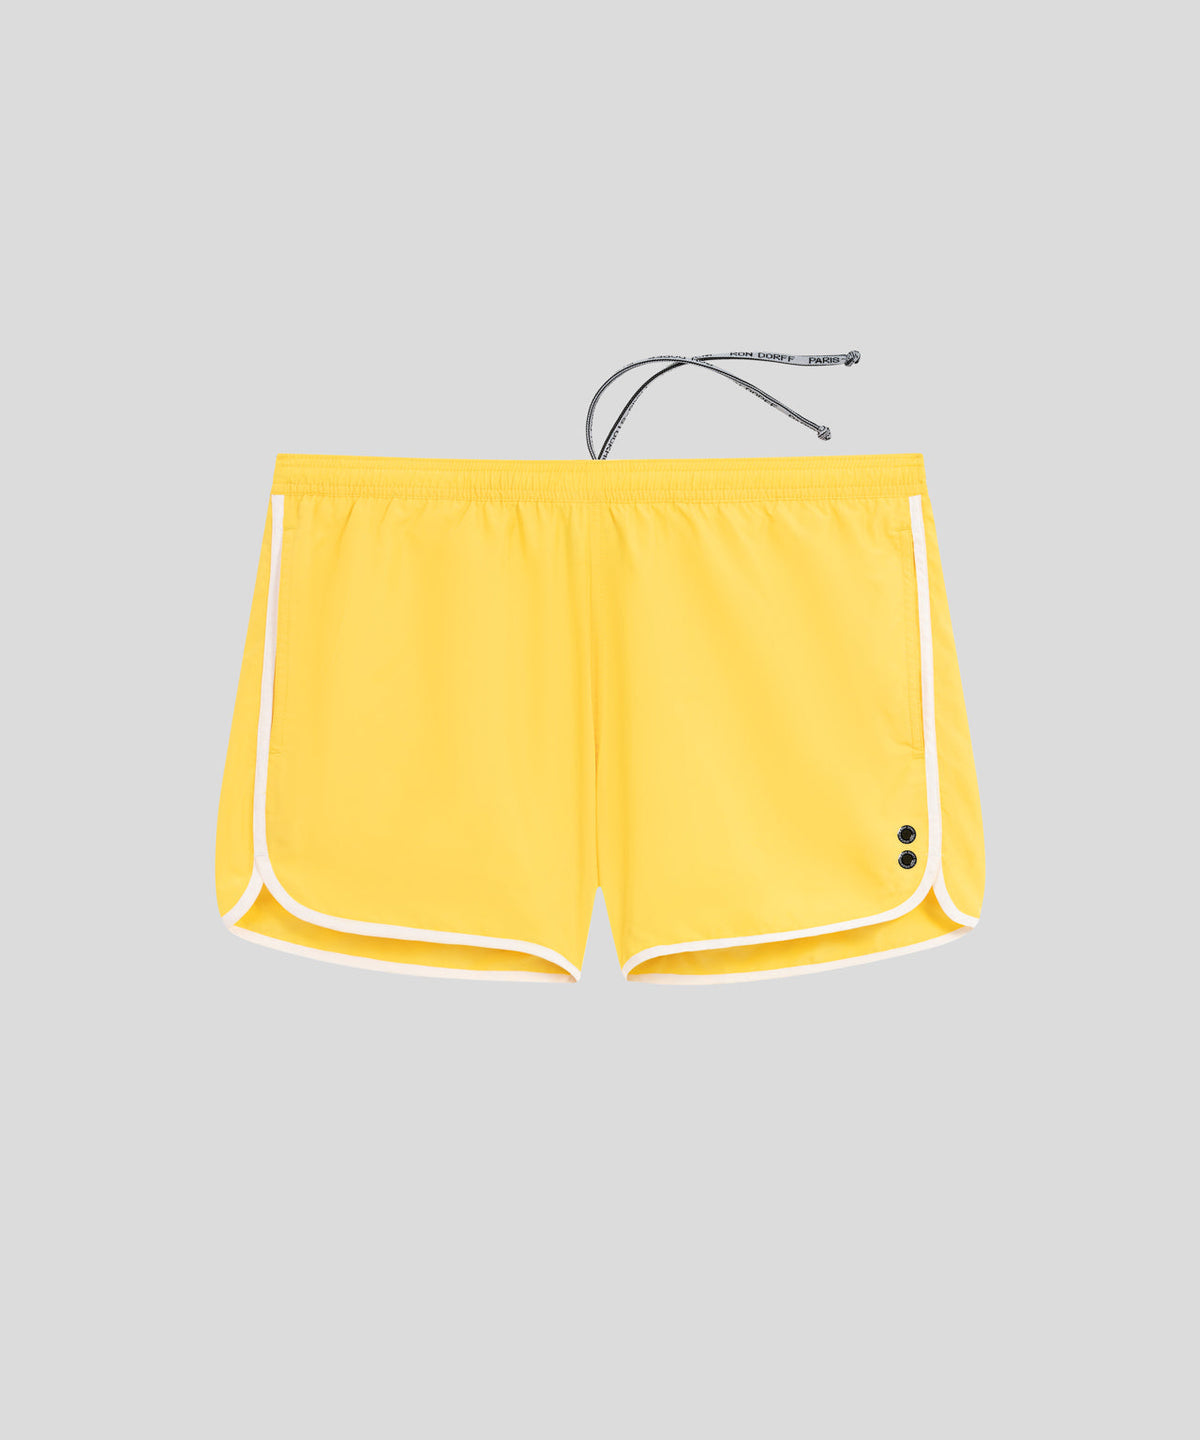 Marathon Swim Shorts: Lemon Yellow / White